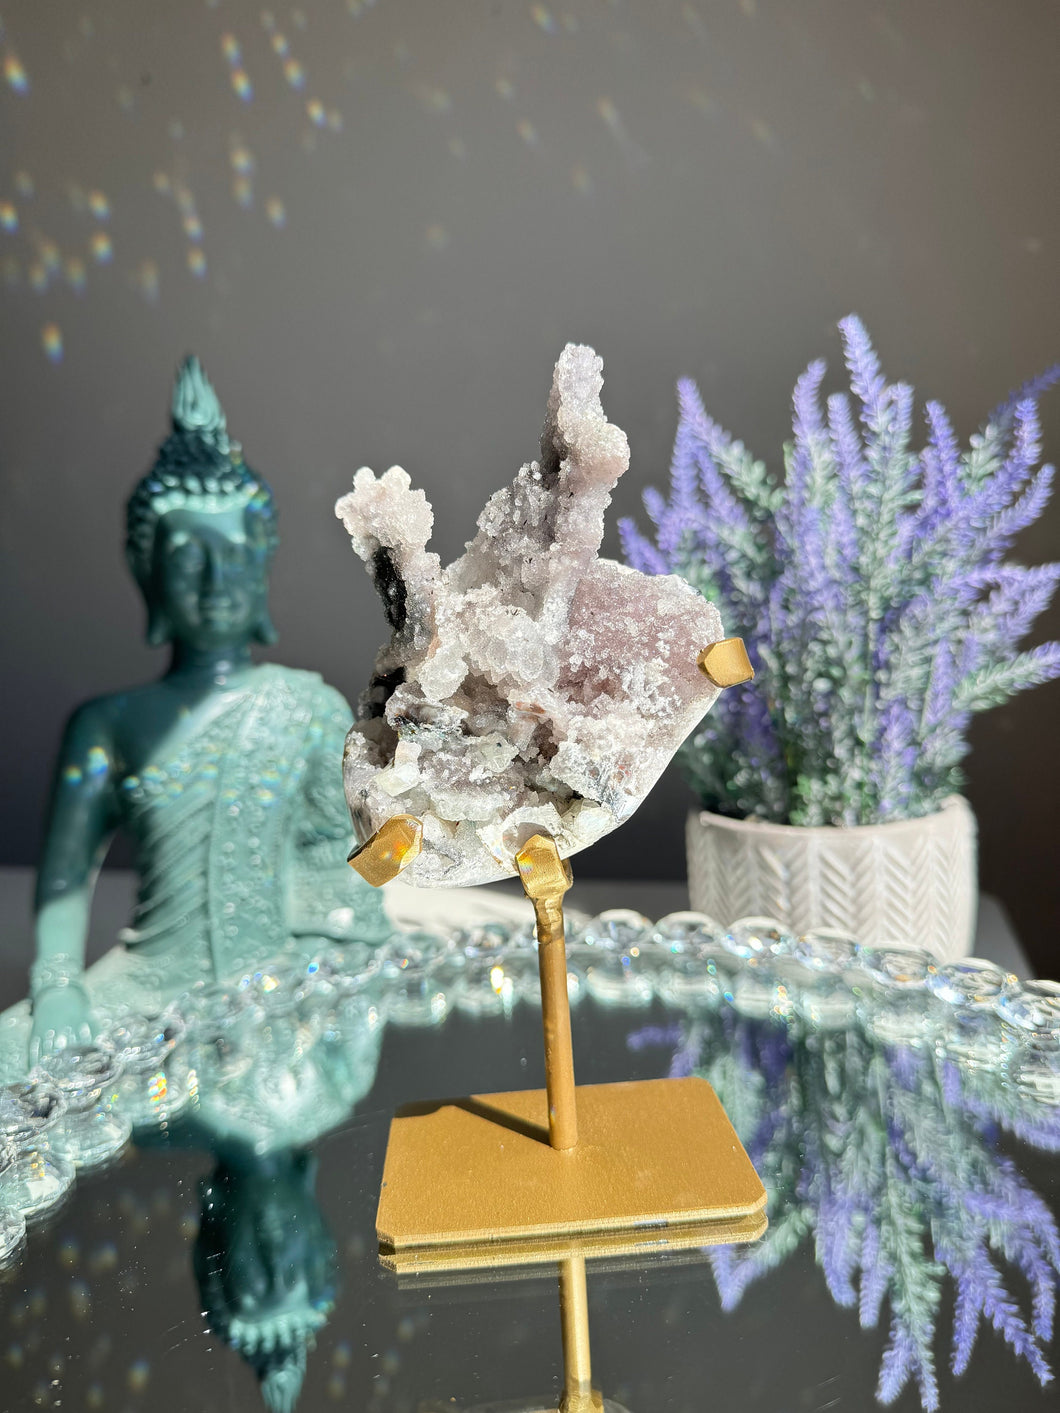 Amethyst flower Healing crystals 2767